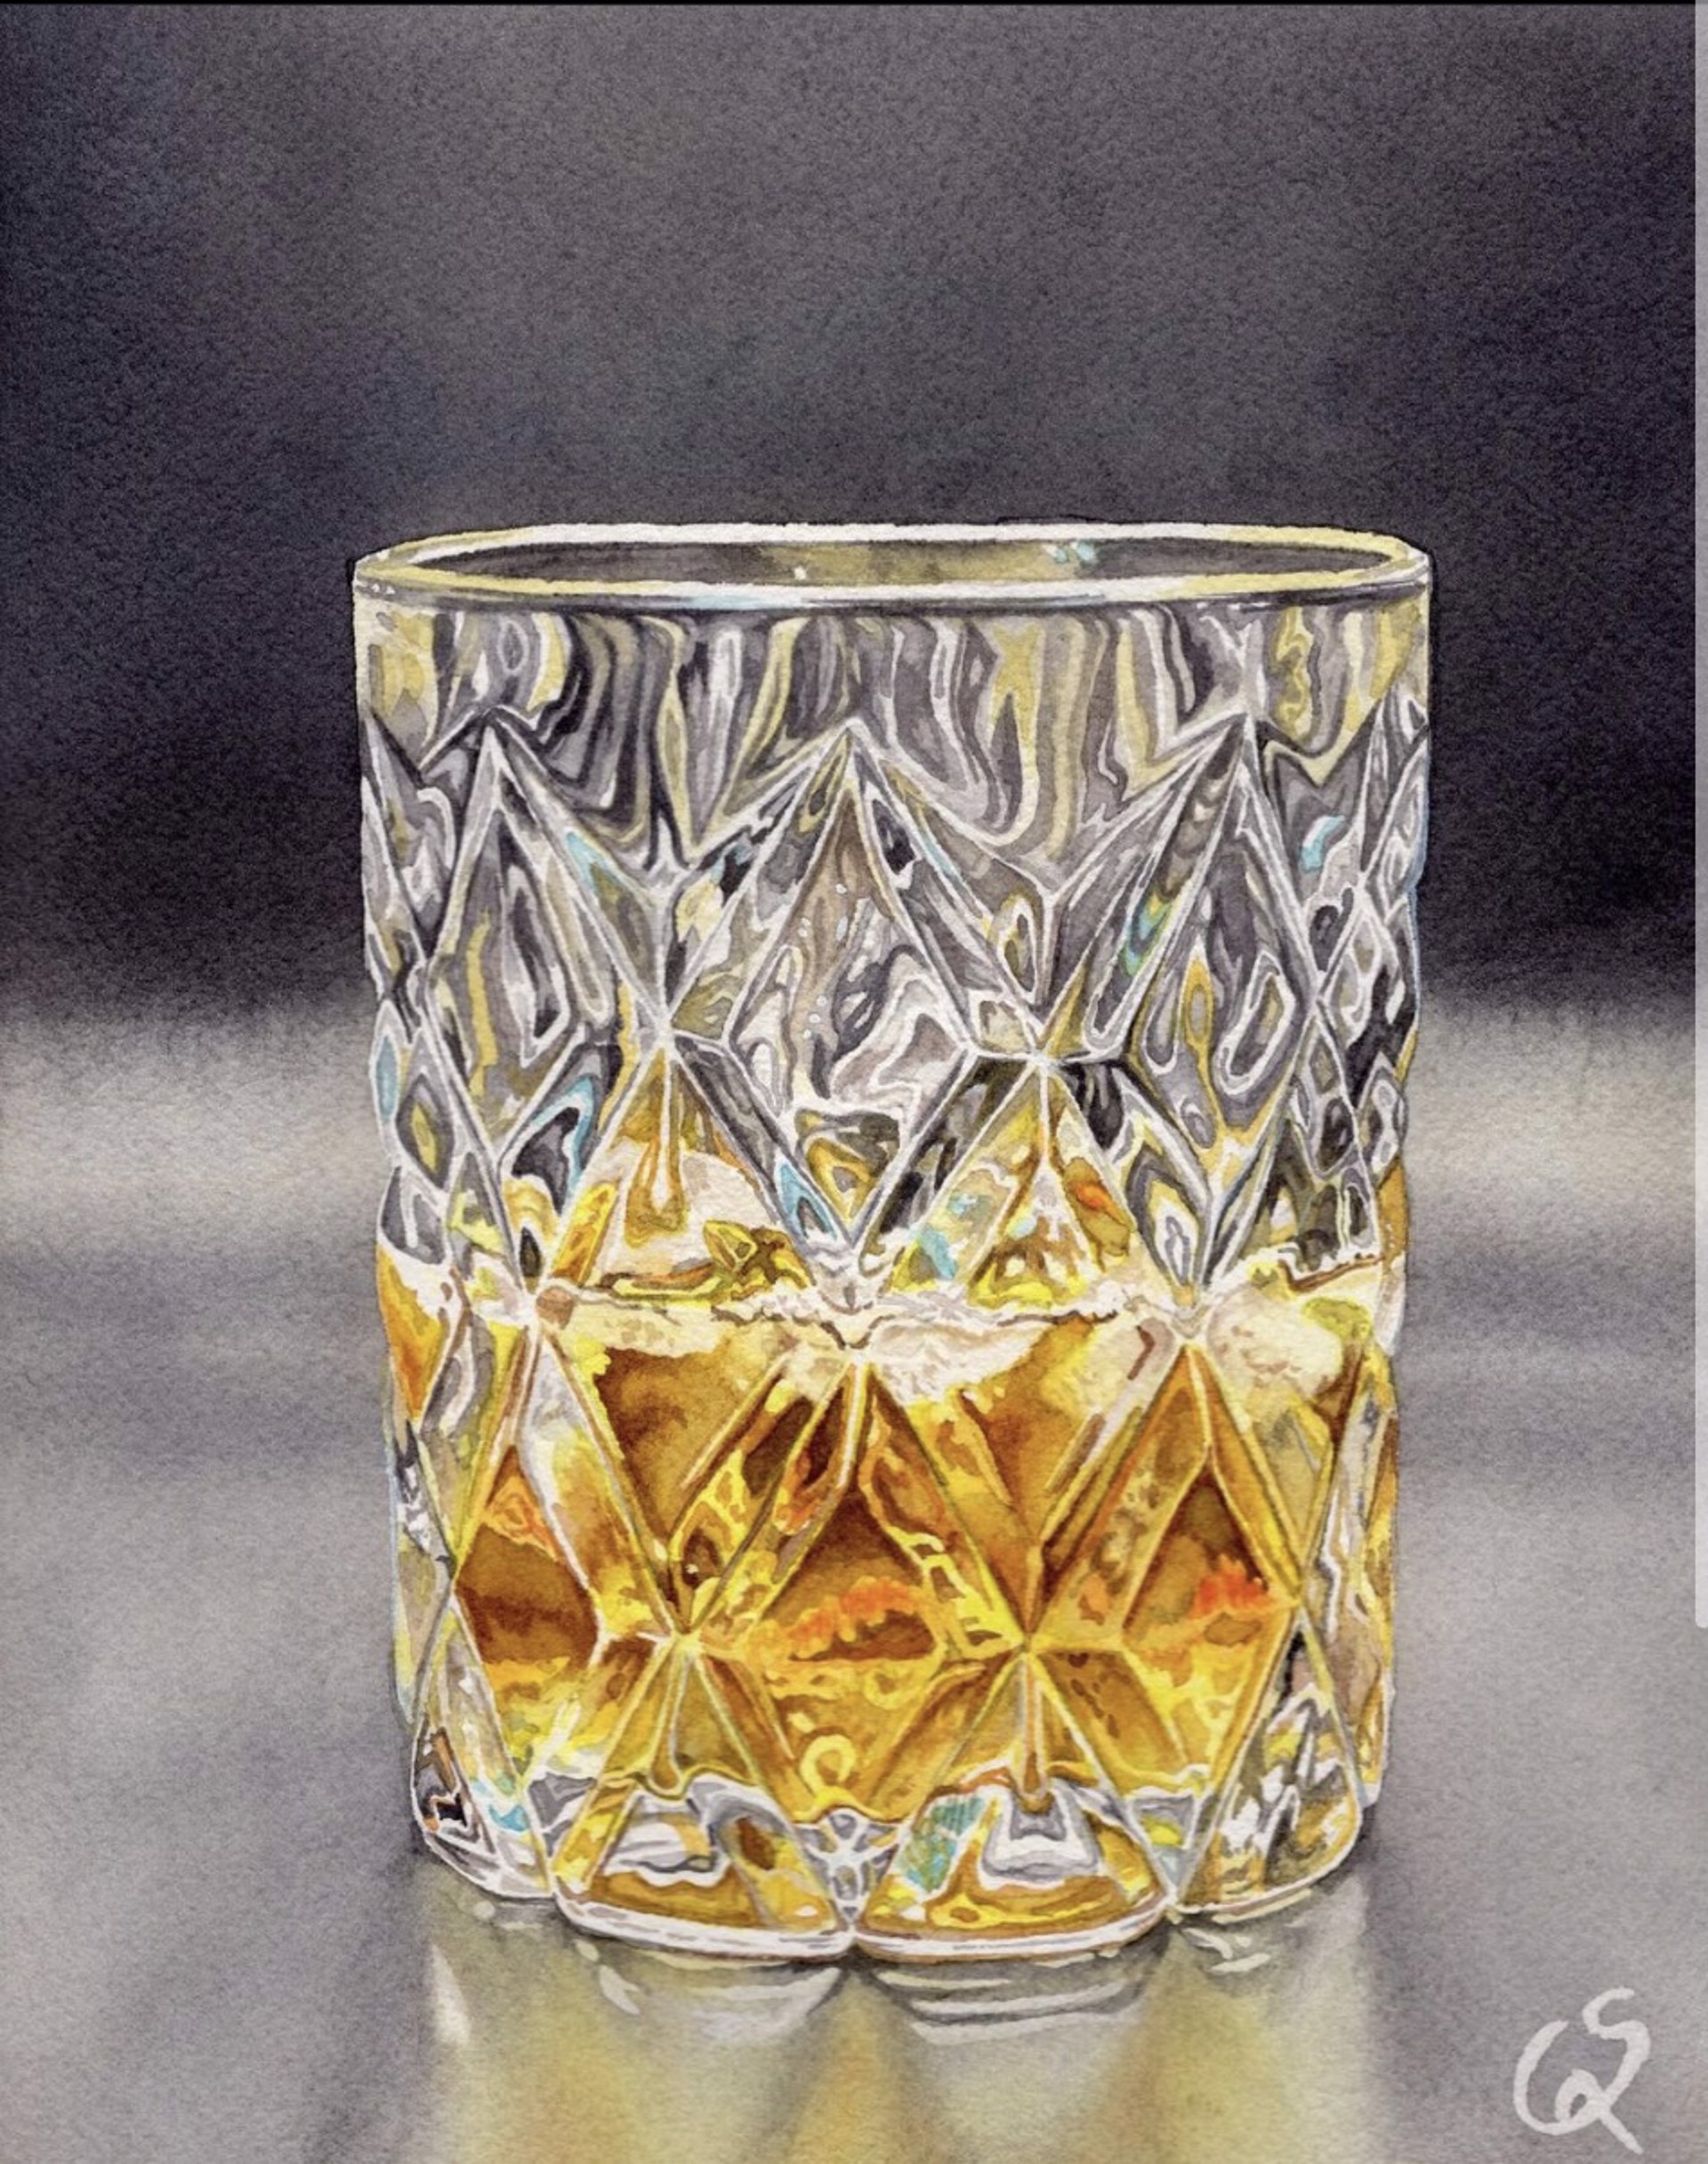 Whiskey on the Rocks by Gabriela Salgado-Dominquez